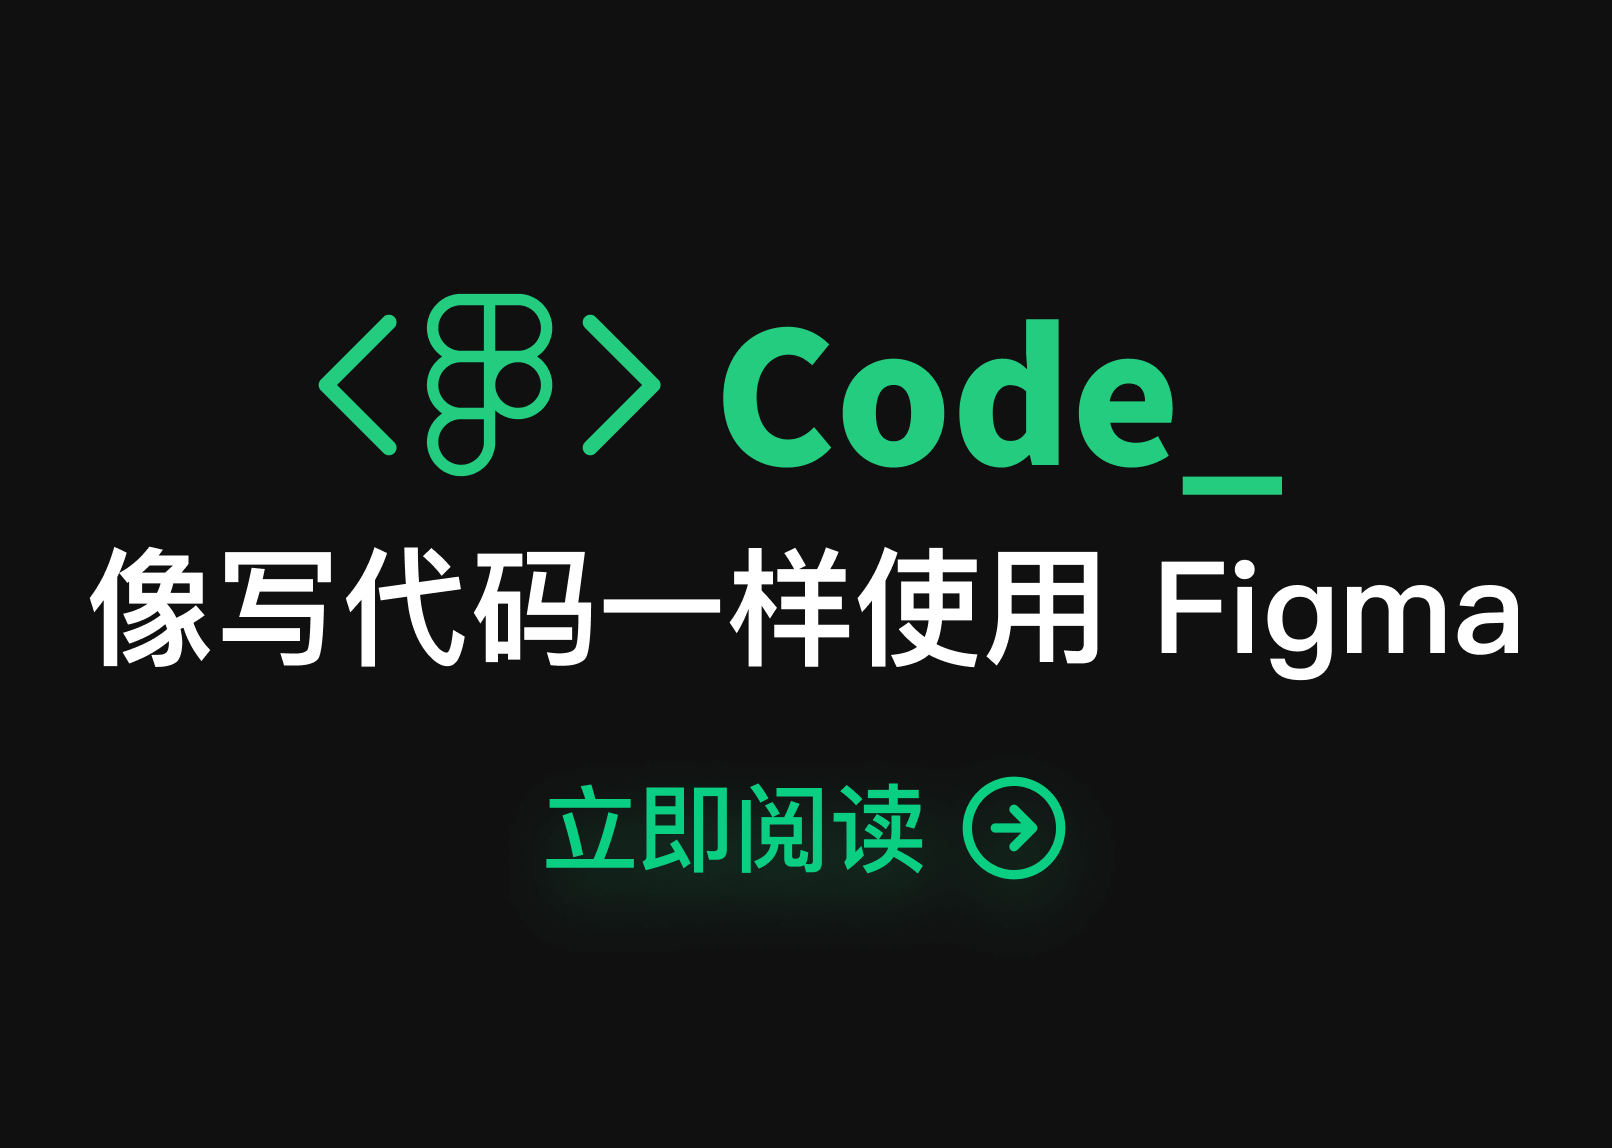 figma code